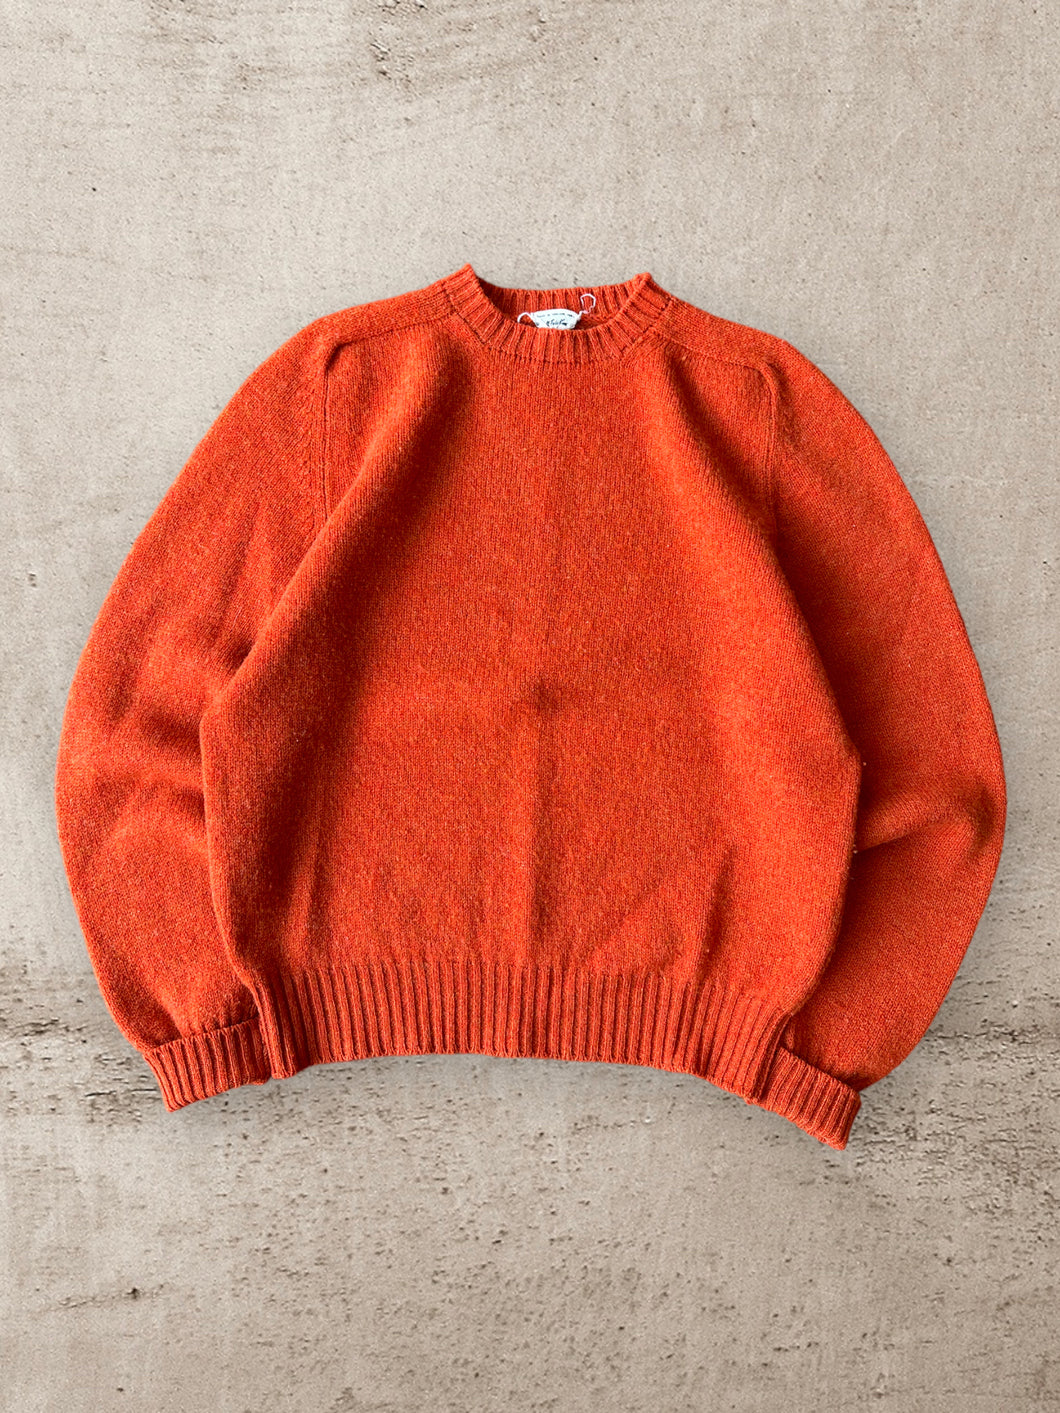 Vintage Orange Knit Sweater - Large